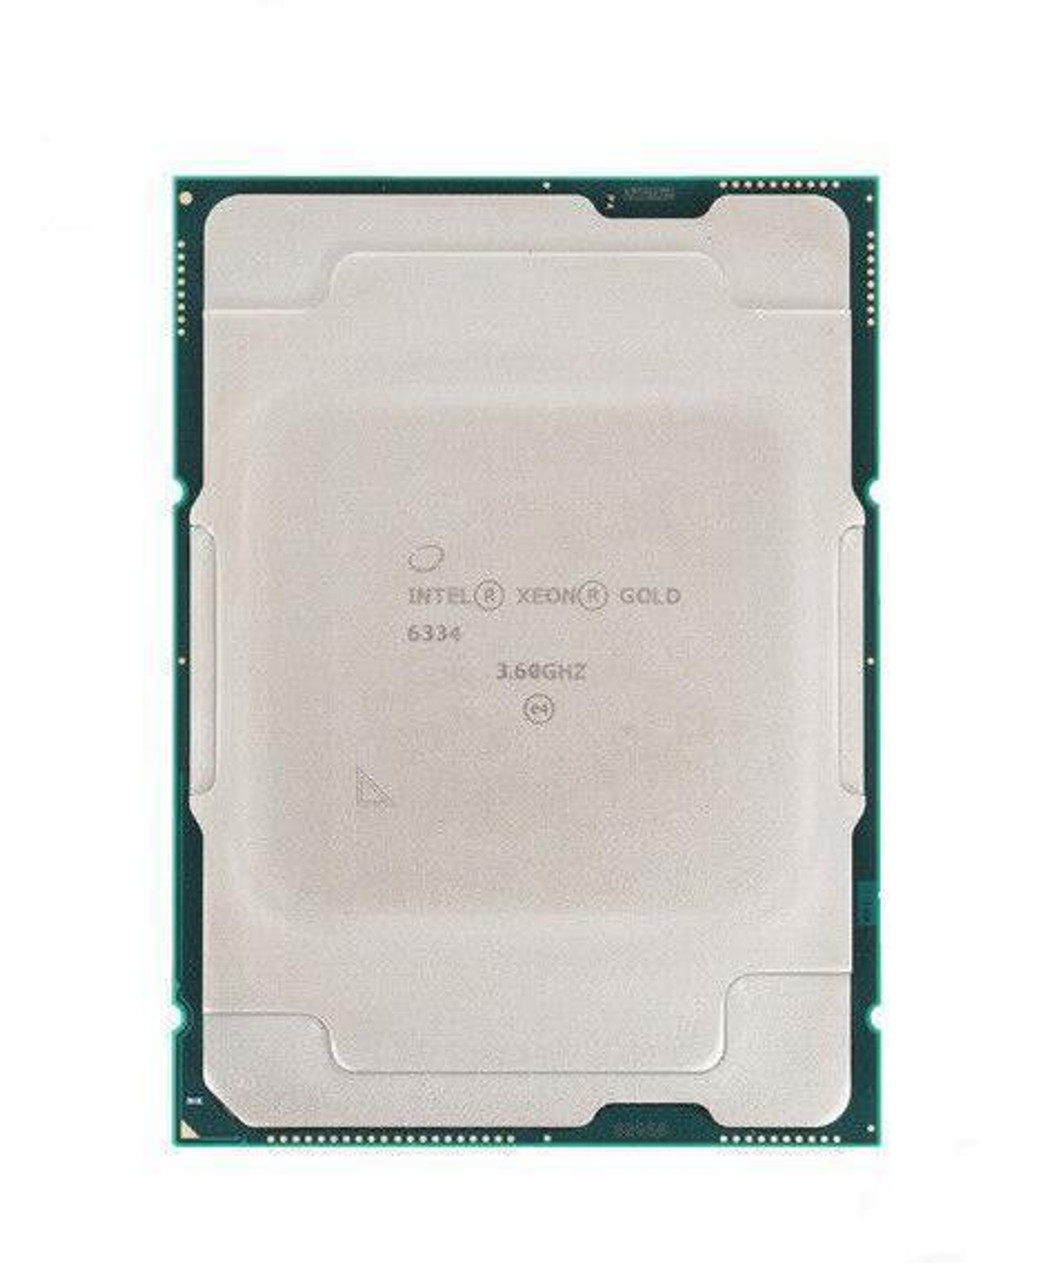 Cisco Systems 3.60GHz 18MB L3 Cache Socket FCLGA4189 Intel Xeon Gold 6334 8-Core Processor Upgrade